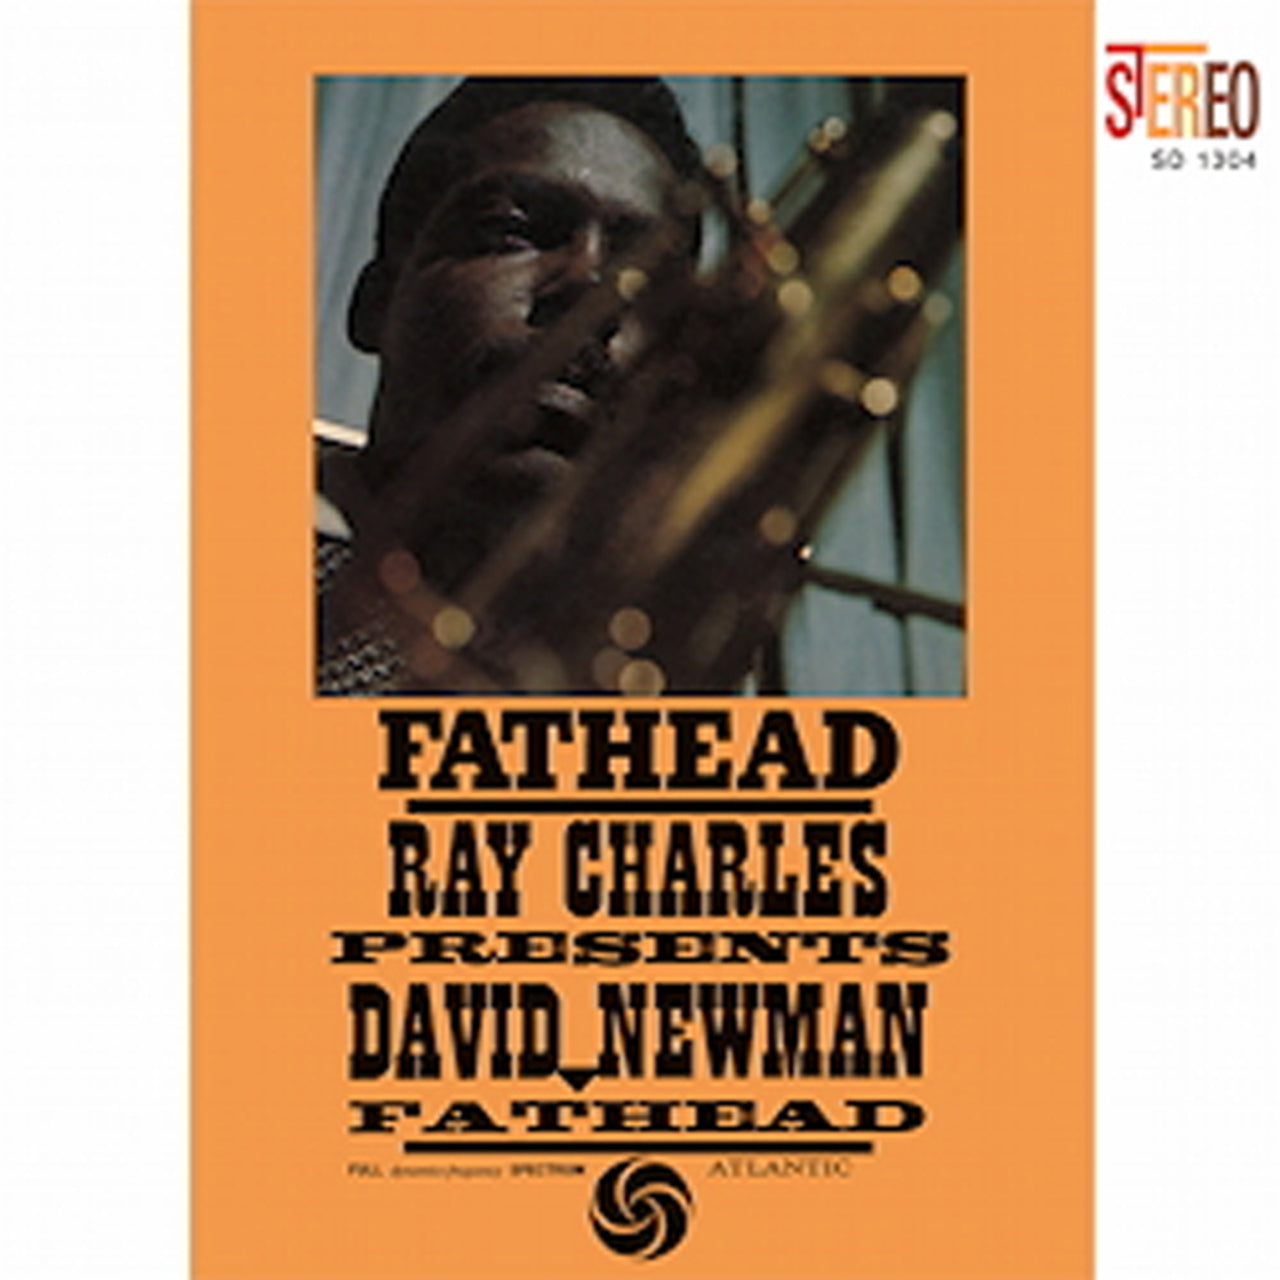 David Newman - Ray Charles presenta a David "Fathead" Newman - Speakers Corner LP